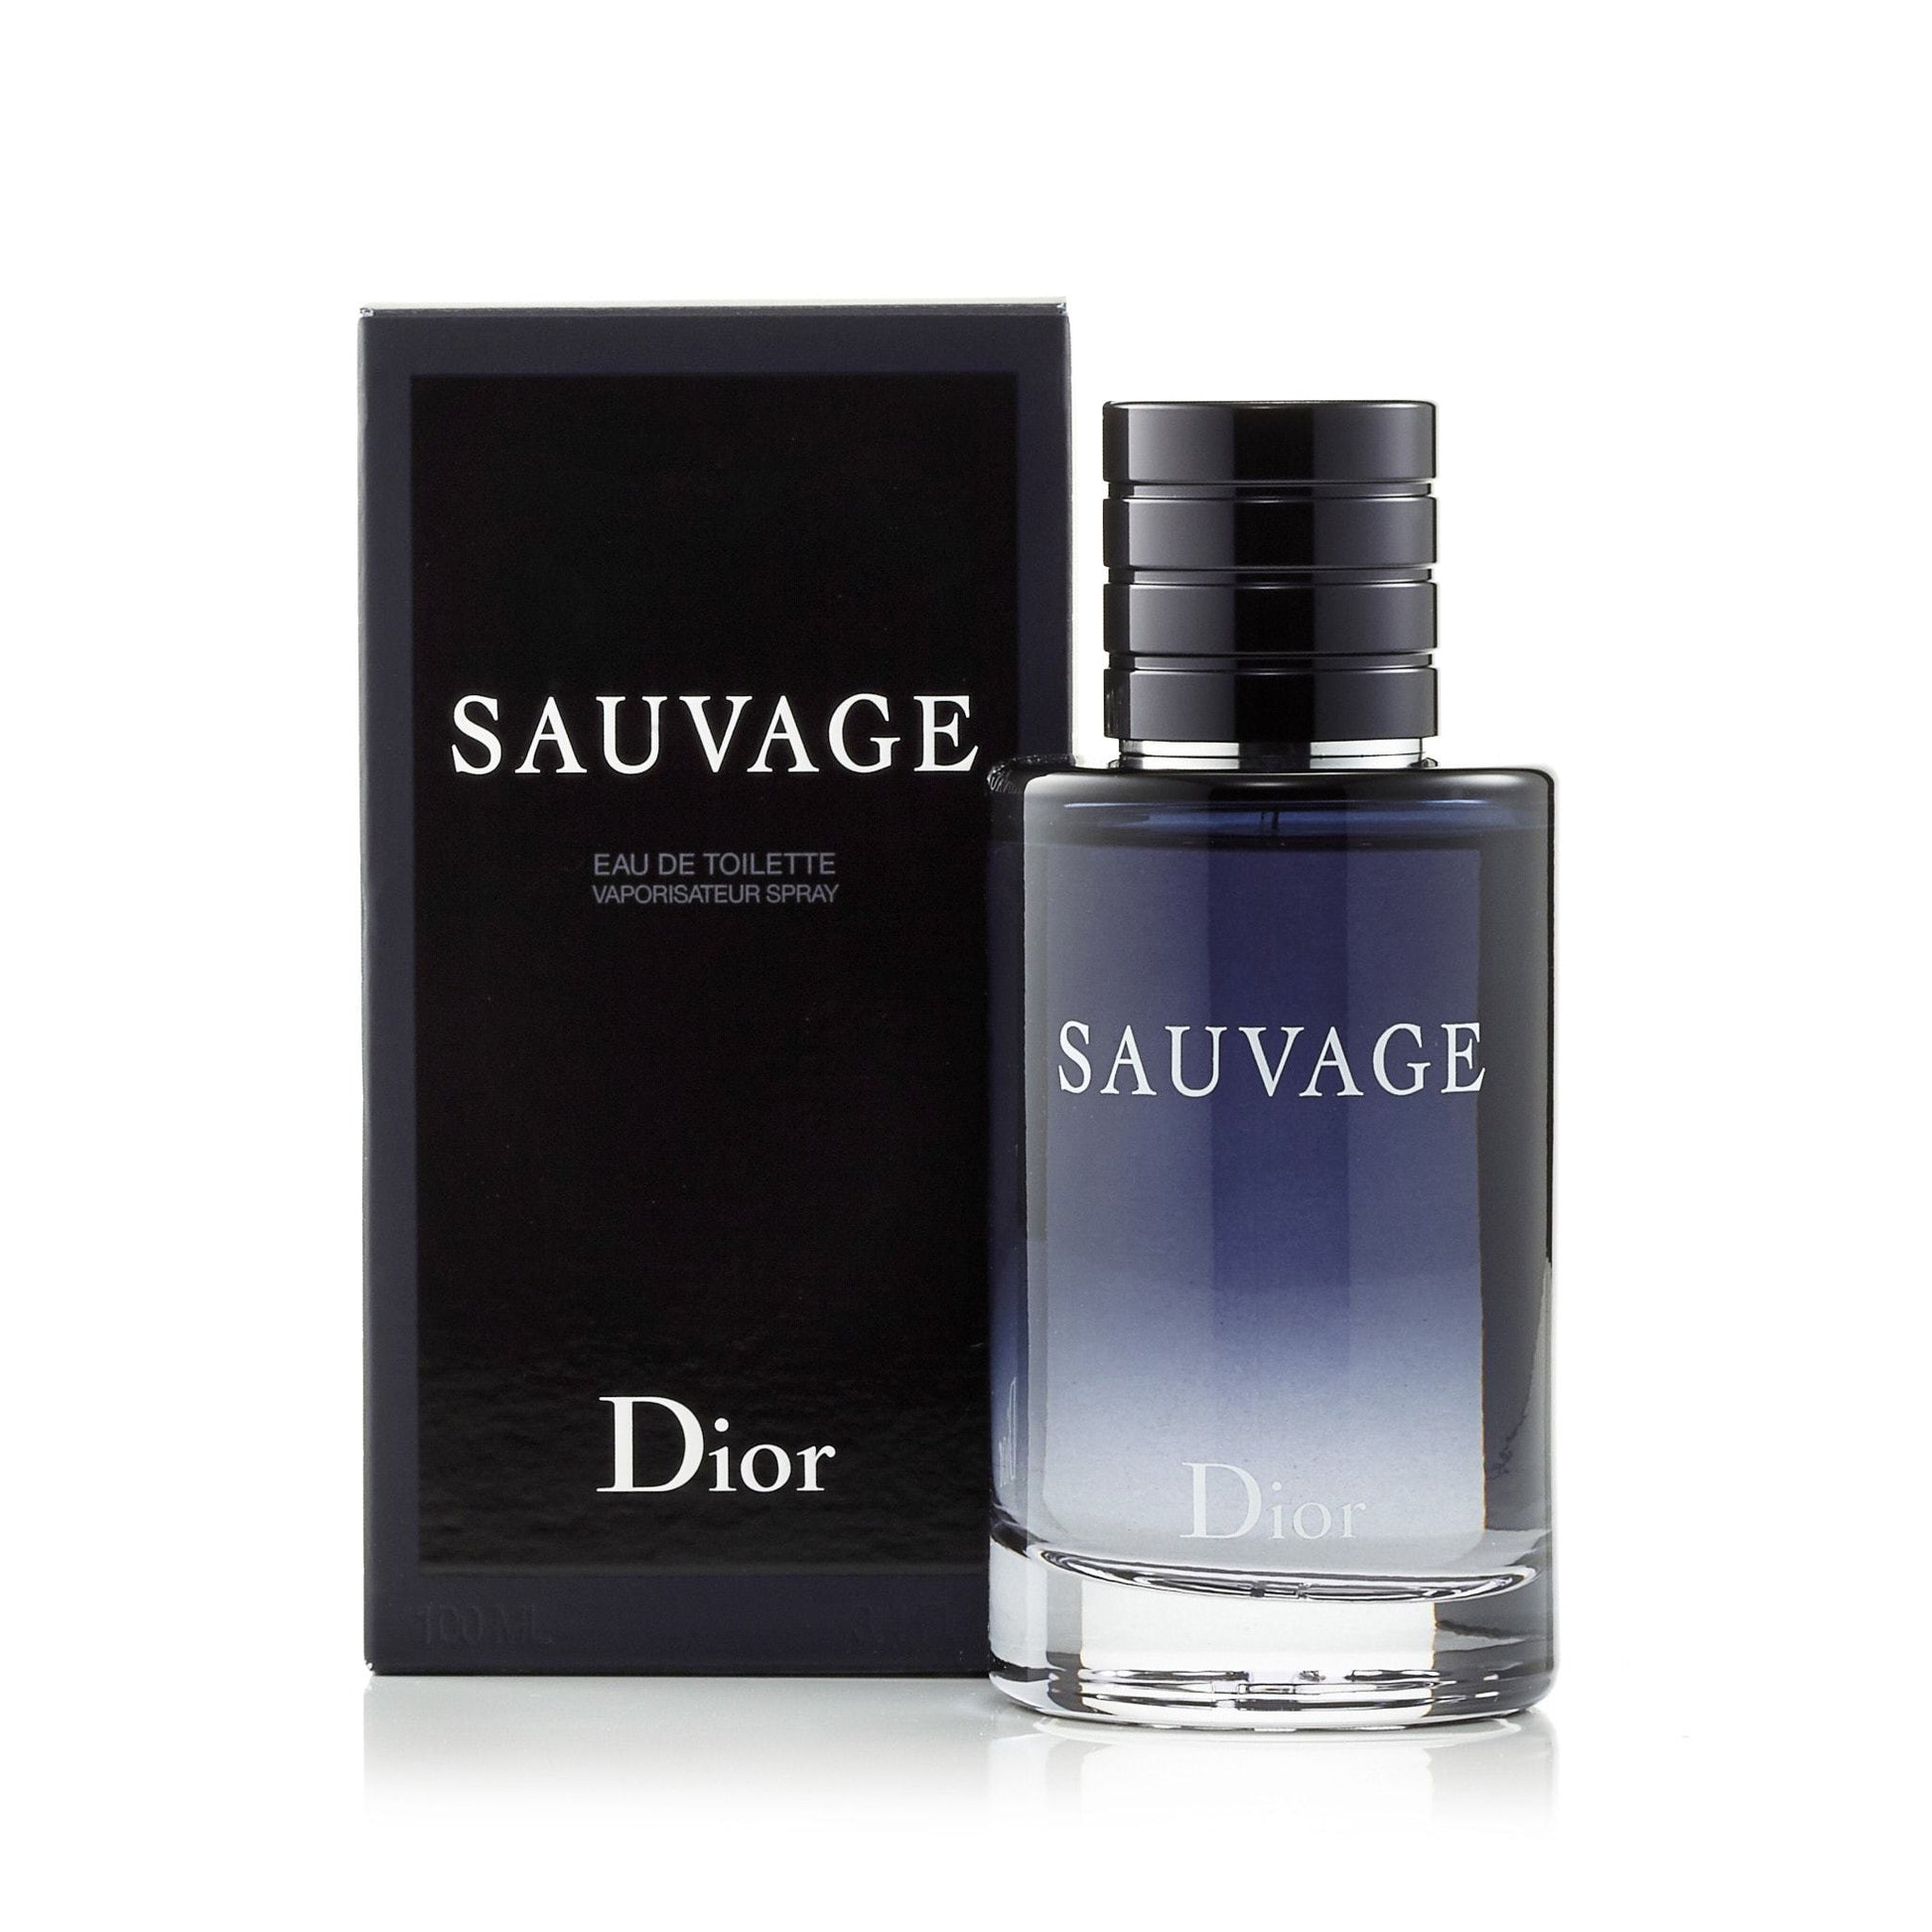 Sauvage Eau de Toilette Spray for Men by Dior, Product image 5